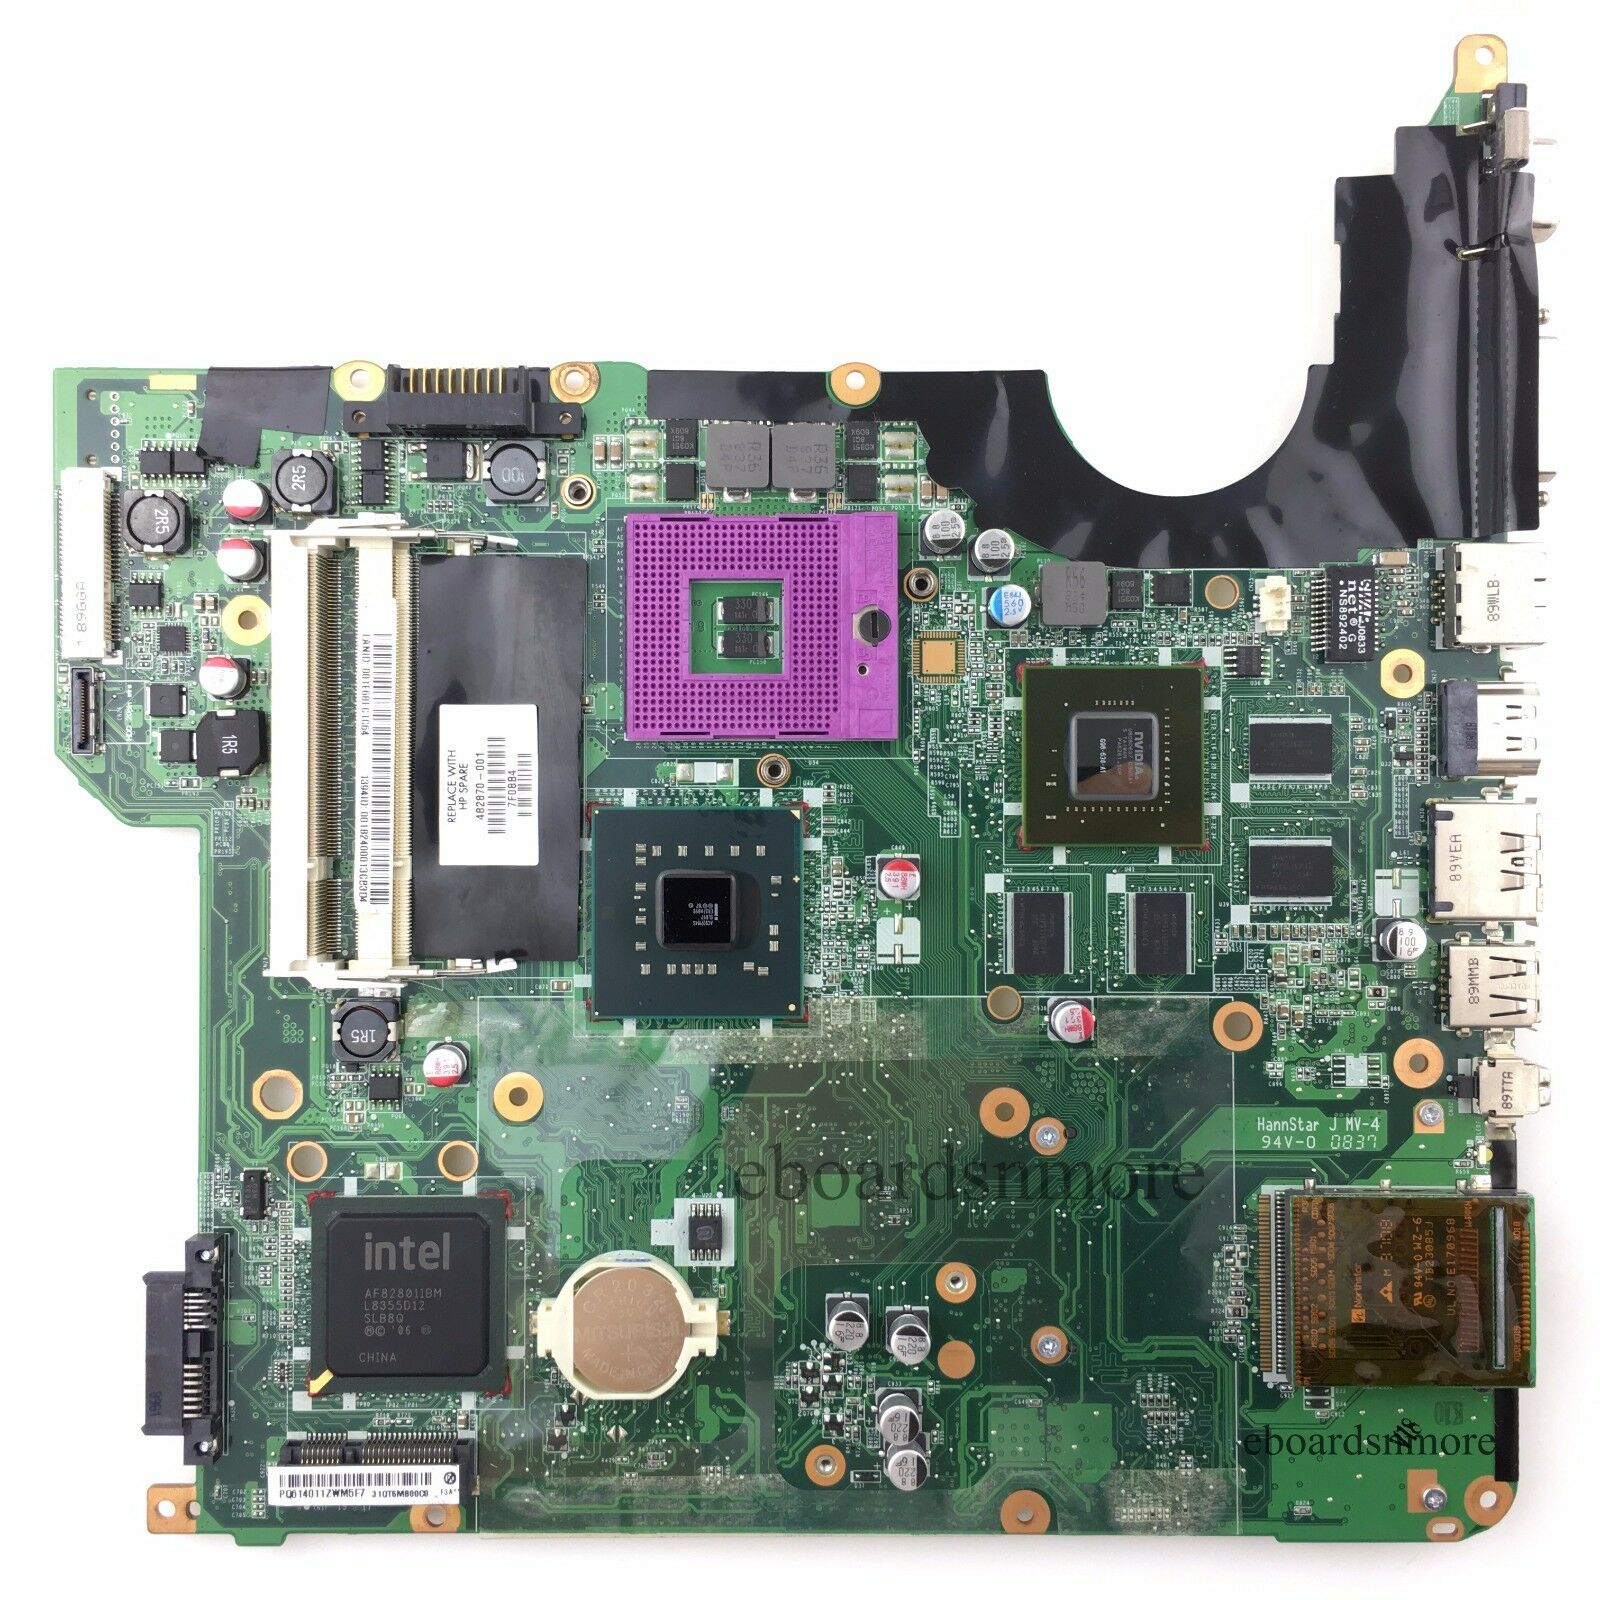 482870-001 Intel PM45 Motherboard for HP DV5-1000 Laptops, nVidia G96-630-A1, A Socket Type: Socket 478/N MP